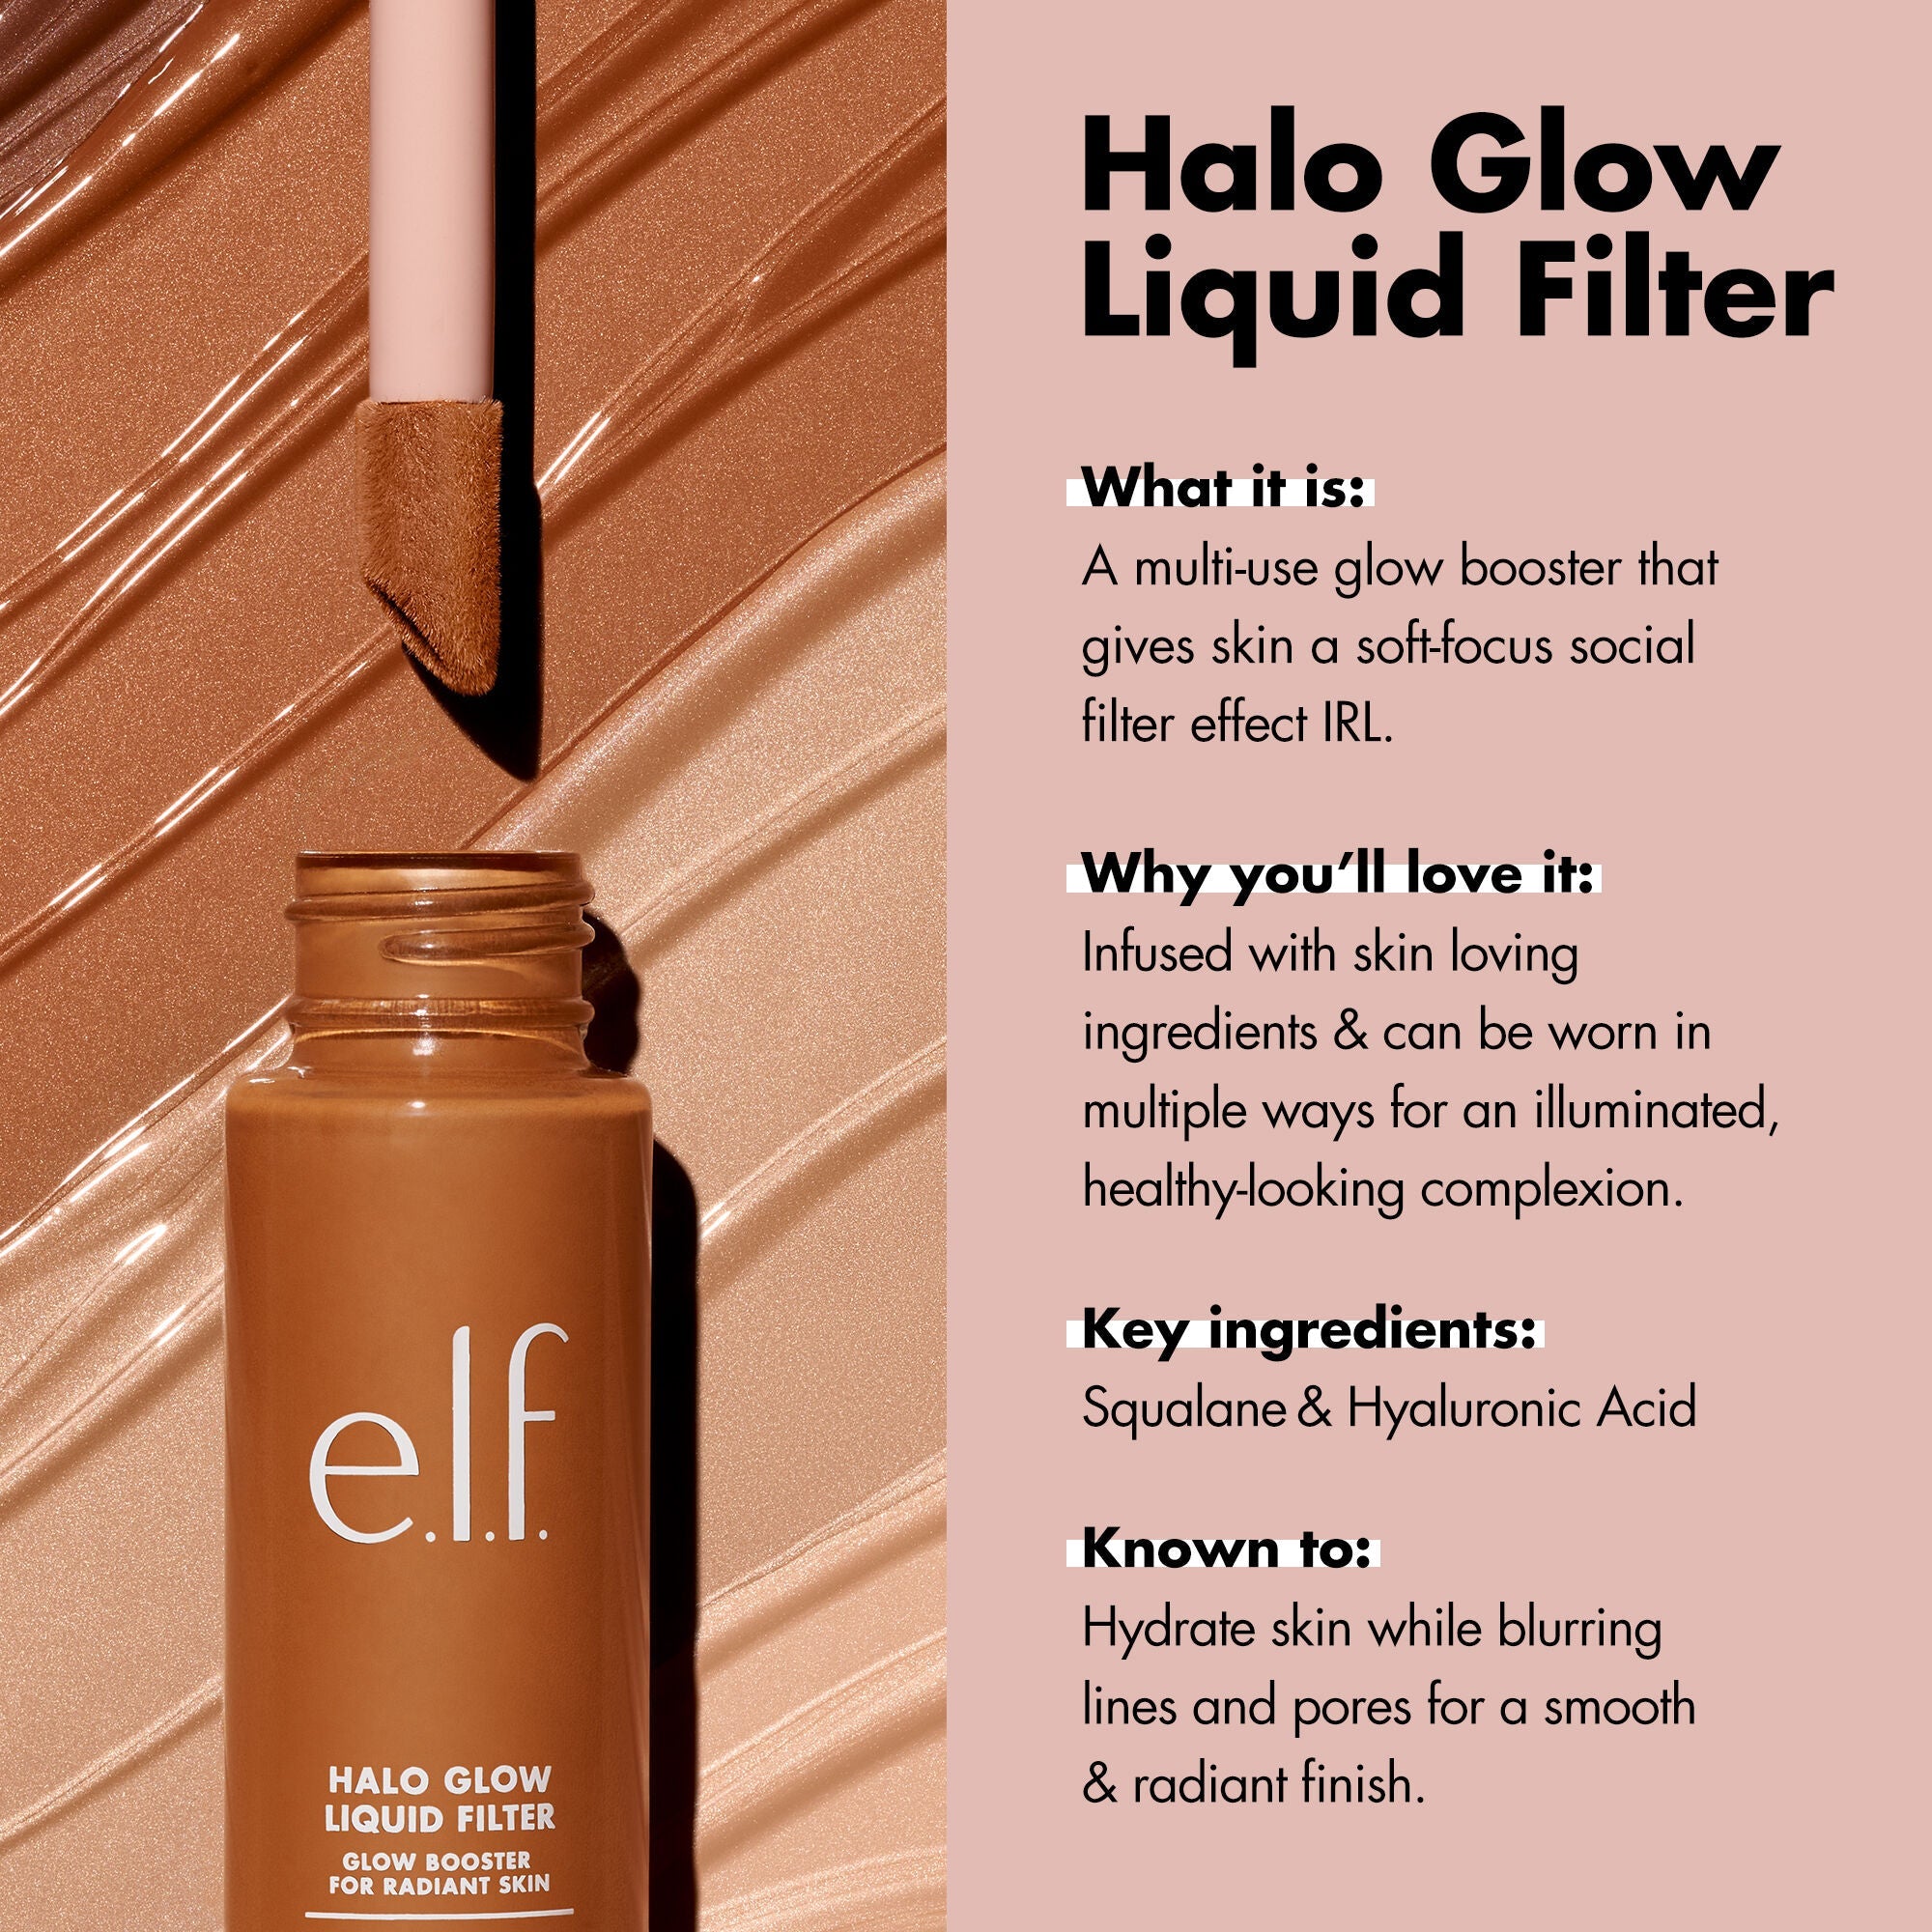 Halo Glow Liquid Filter - 2 Fair/Light Neutral Warm